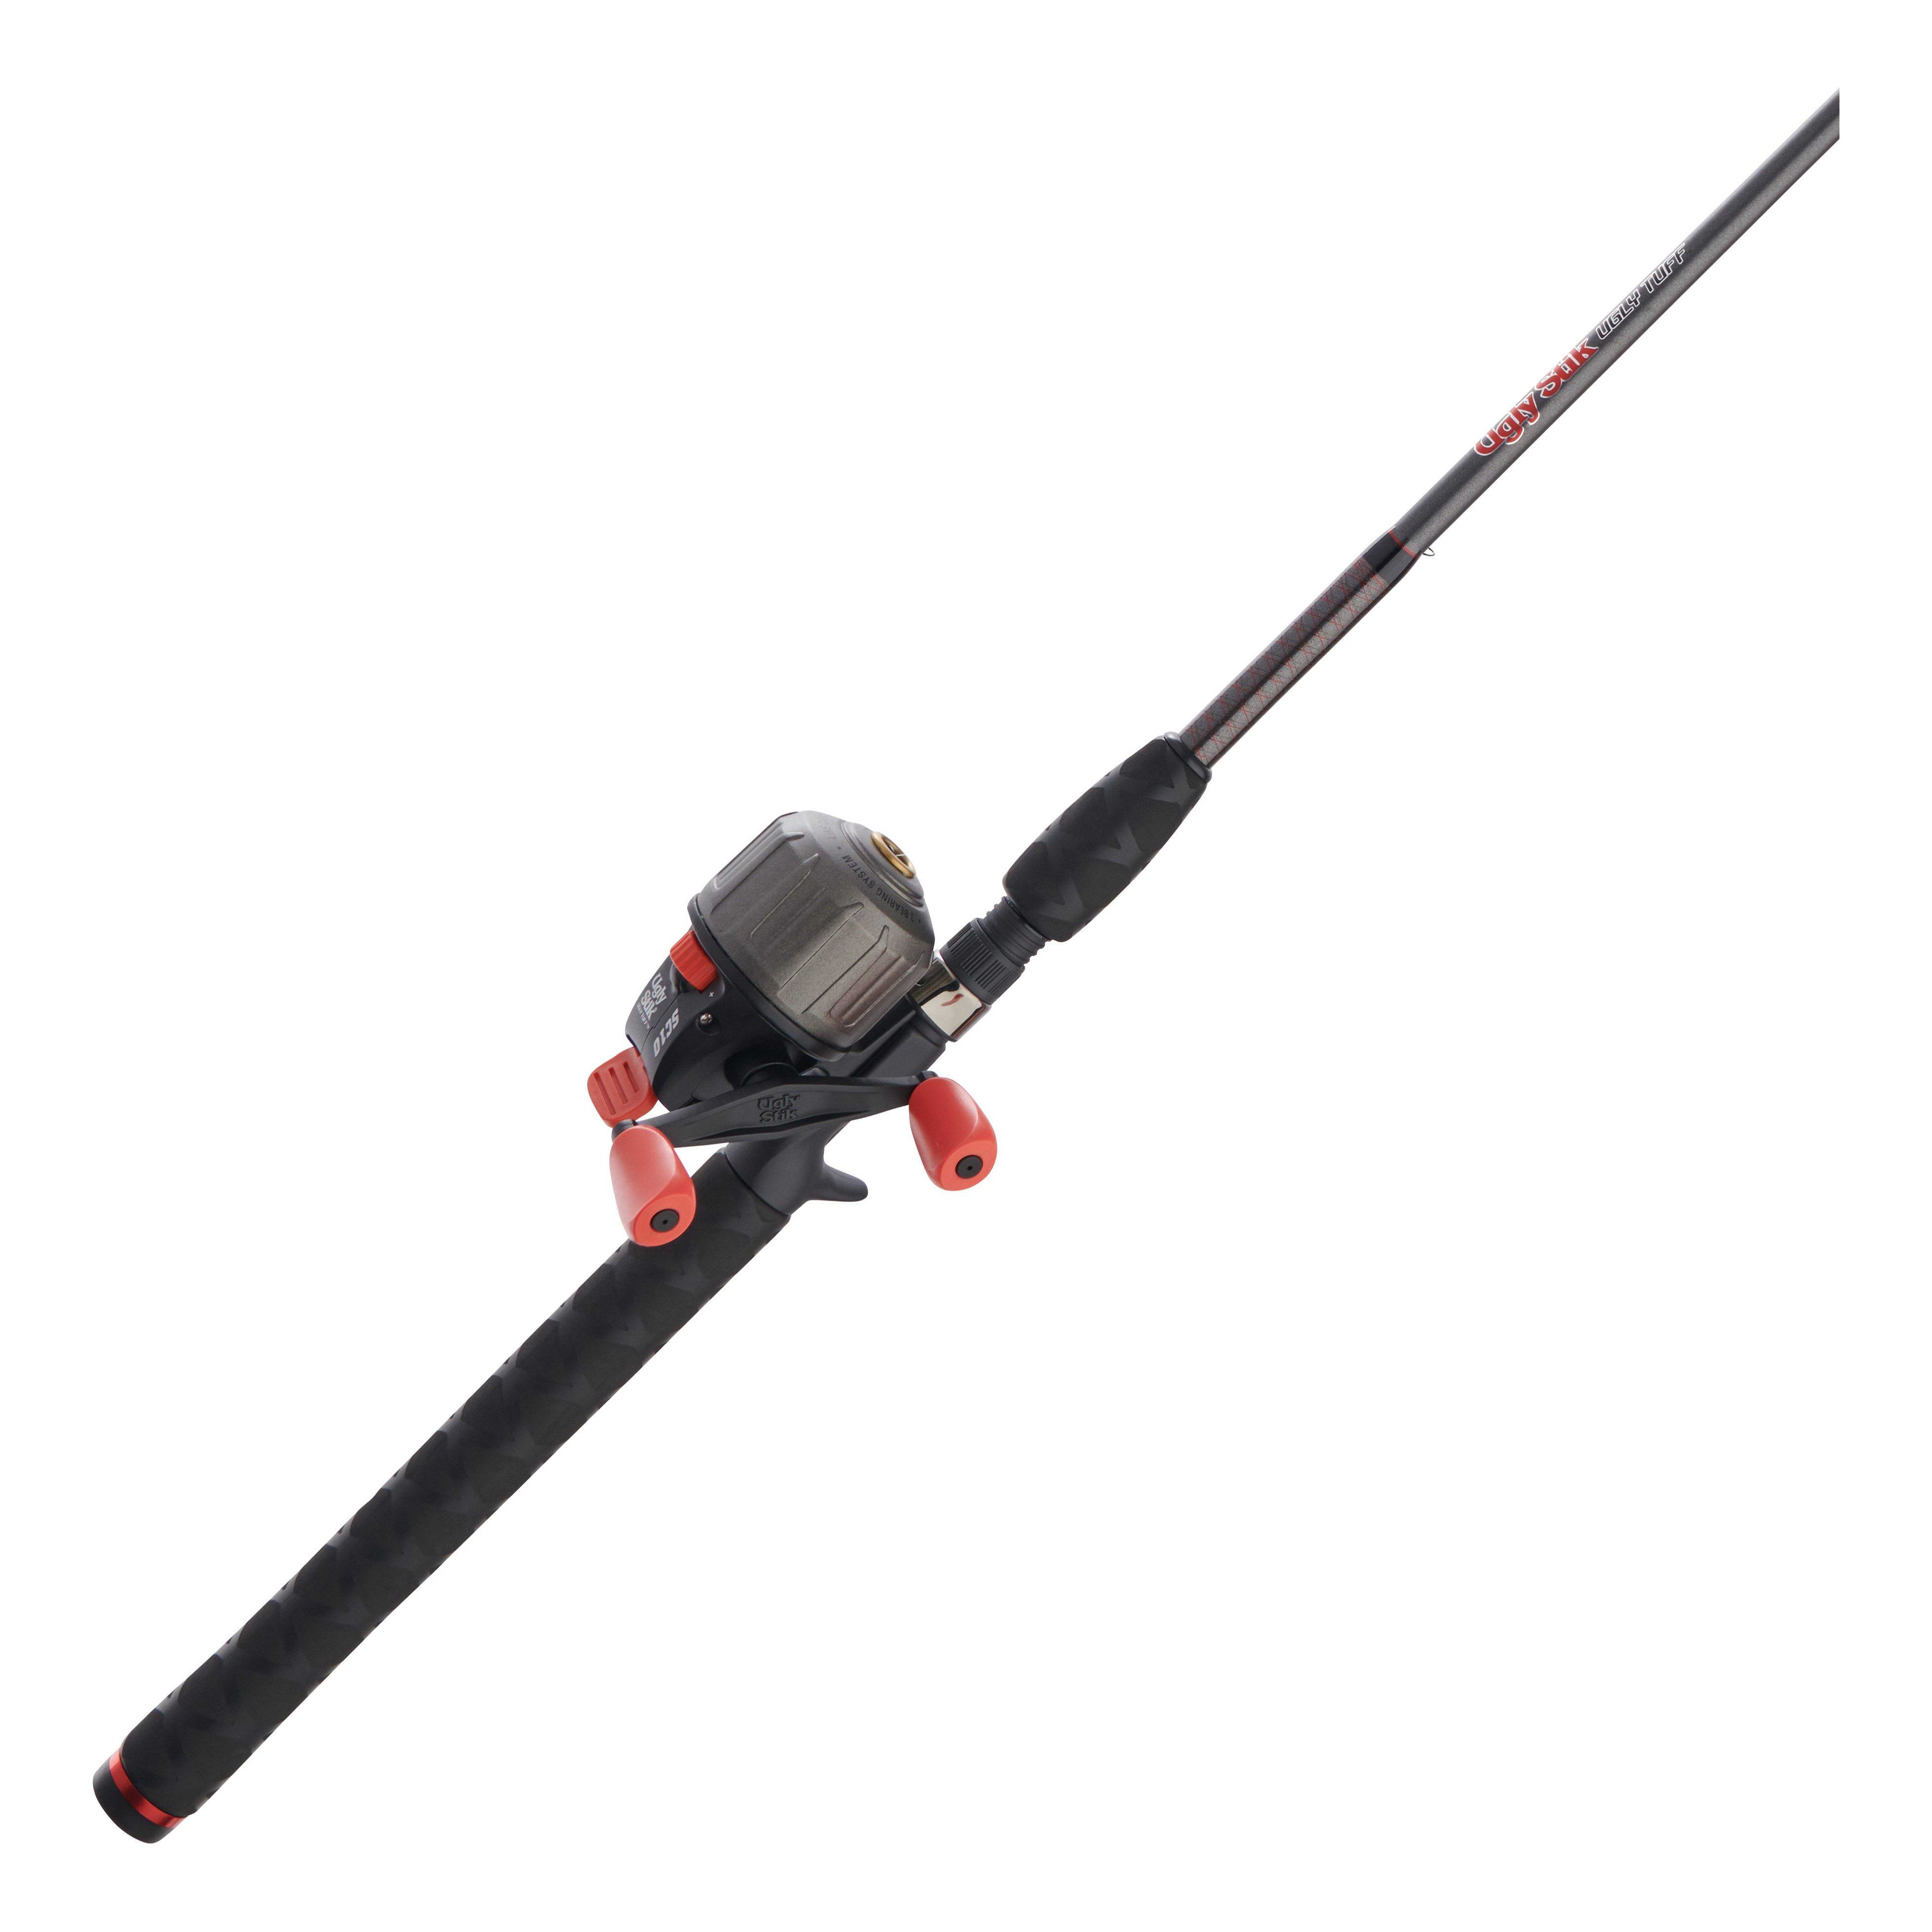 160 pcs Kit Guides Black Tips Stainless Re Steel Fishing Rod, Reel